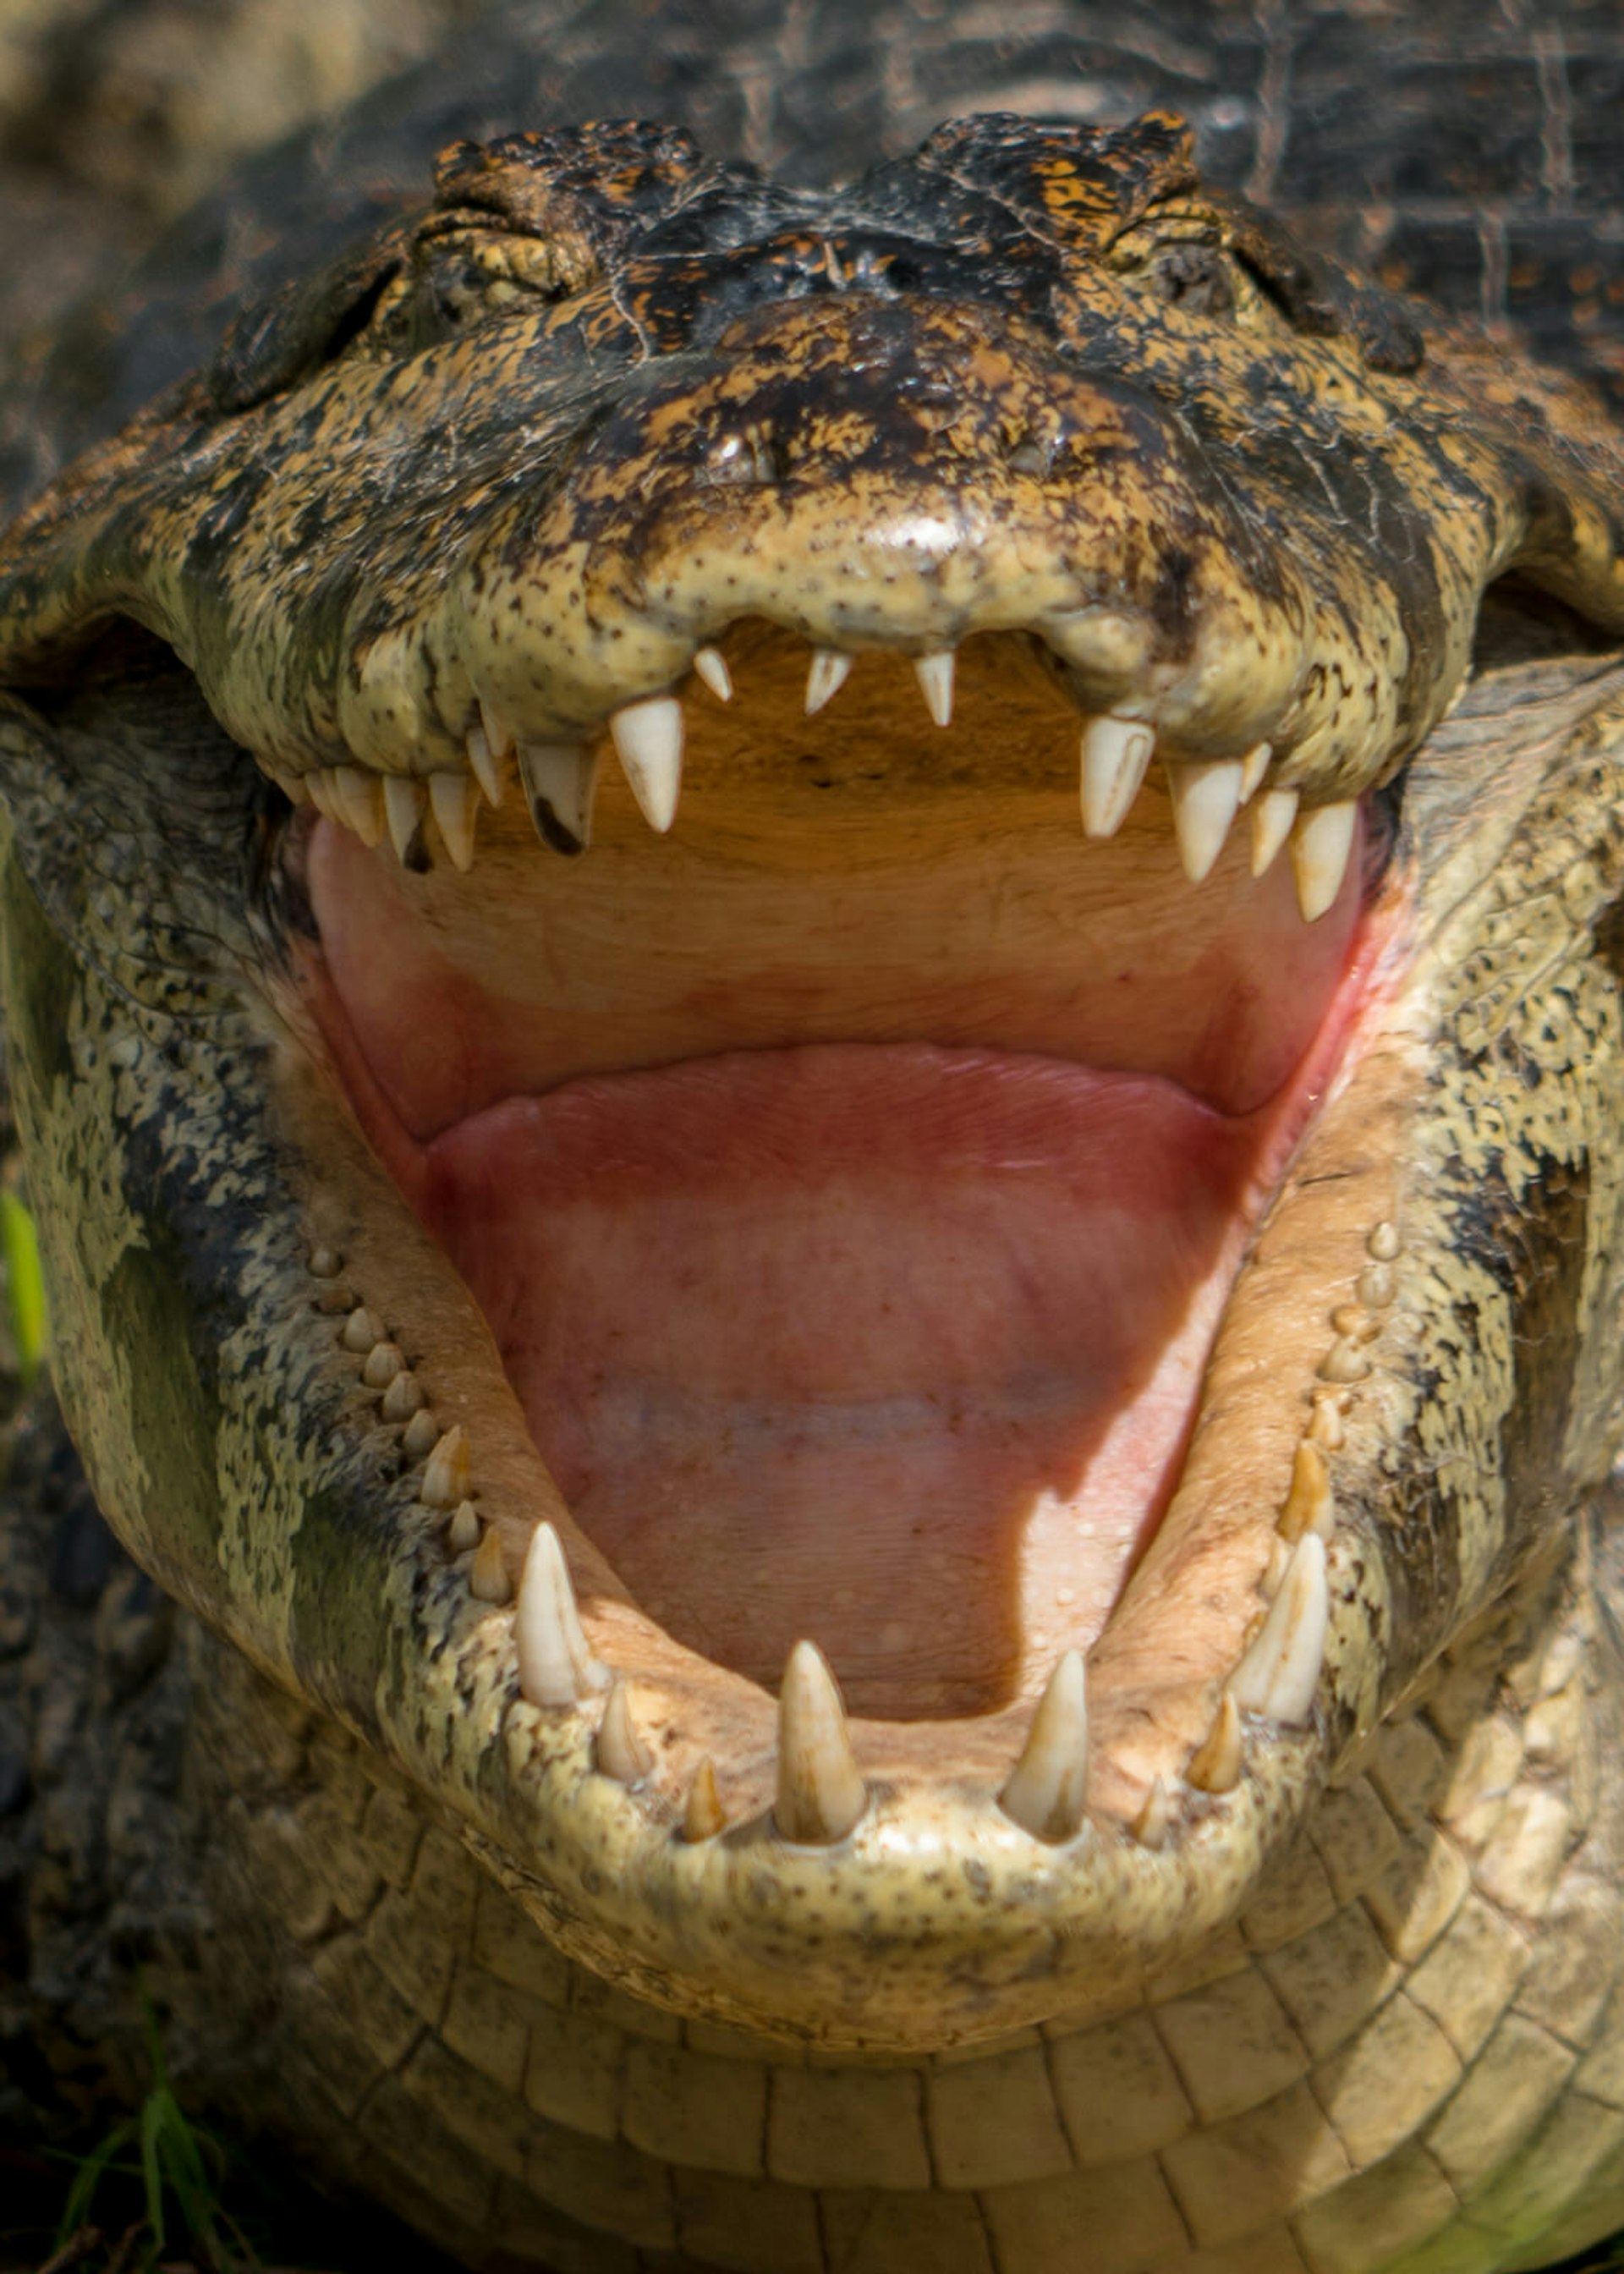 Yawning caiman, Pantanal, Brazil © Steven Fish / Shutterstock